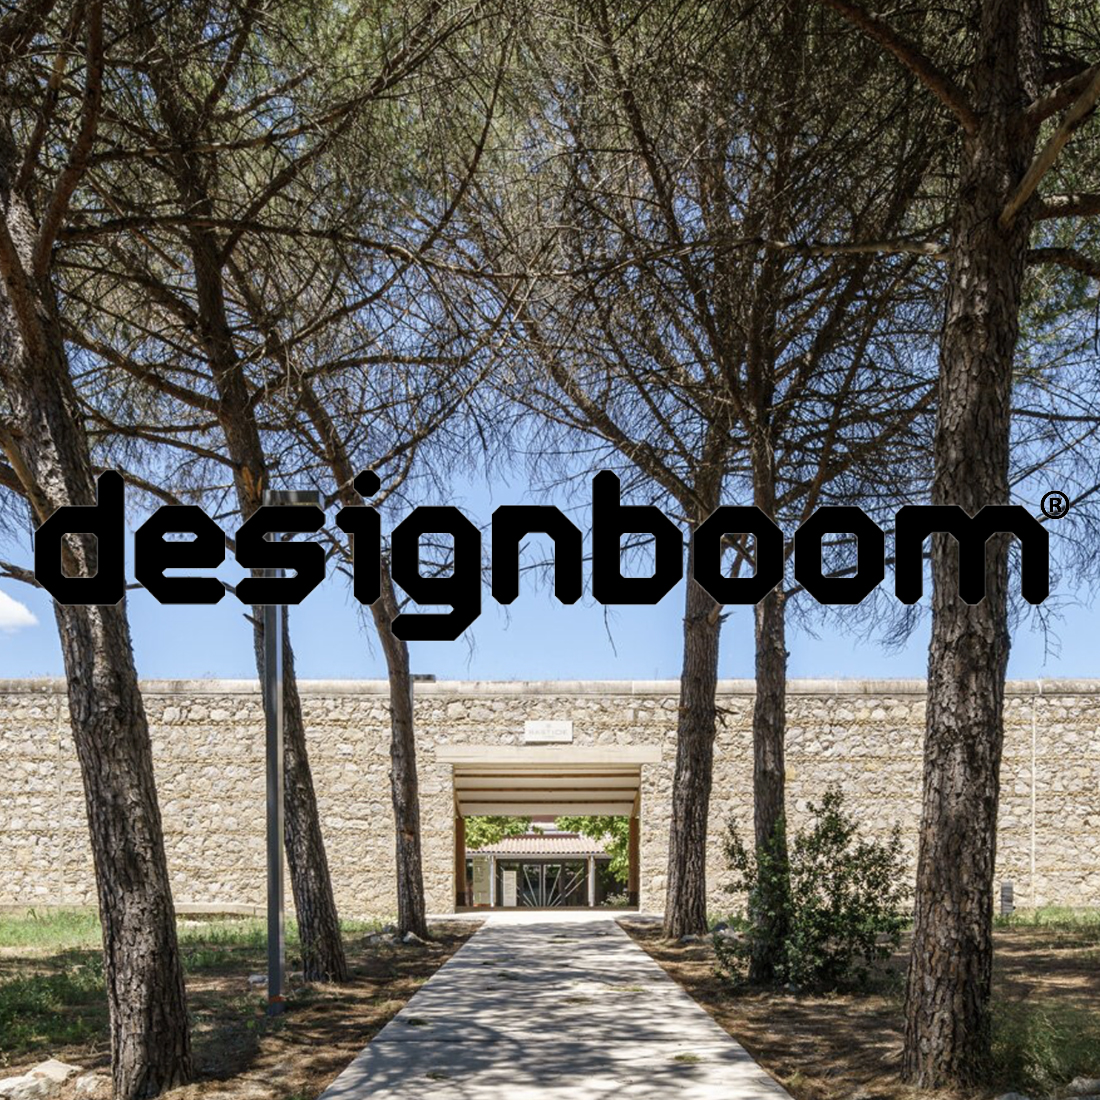 designboom.com – jan 09, 2022 | Brenac & Gonzalez et Associés